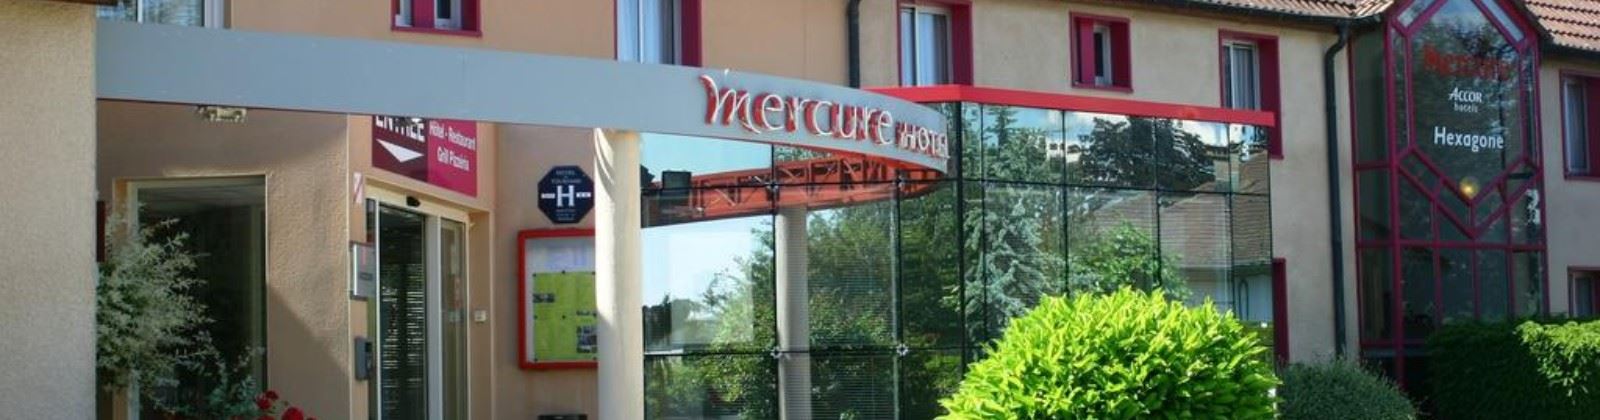 OLEVENE image - mercure-hexagone-luxeuil-les-bains-olevene-hotel-restaurant-reunions-